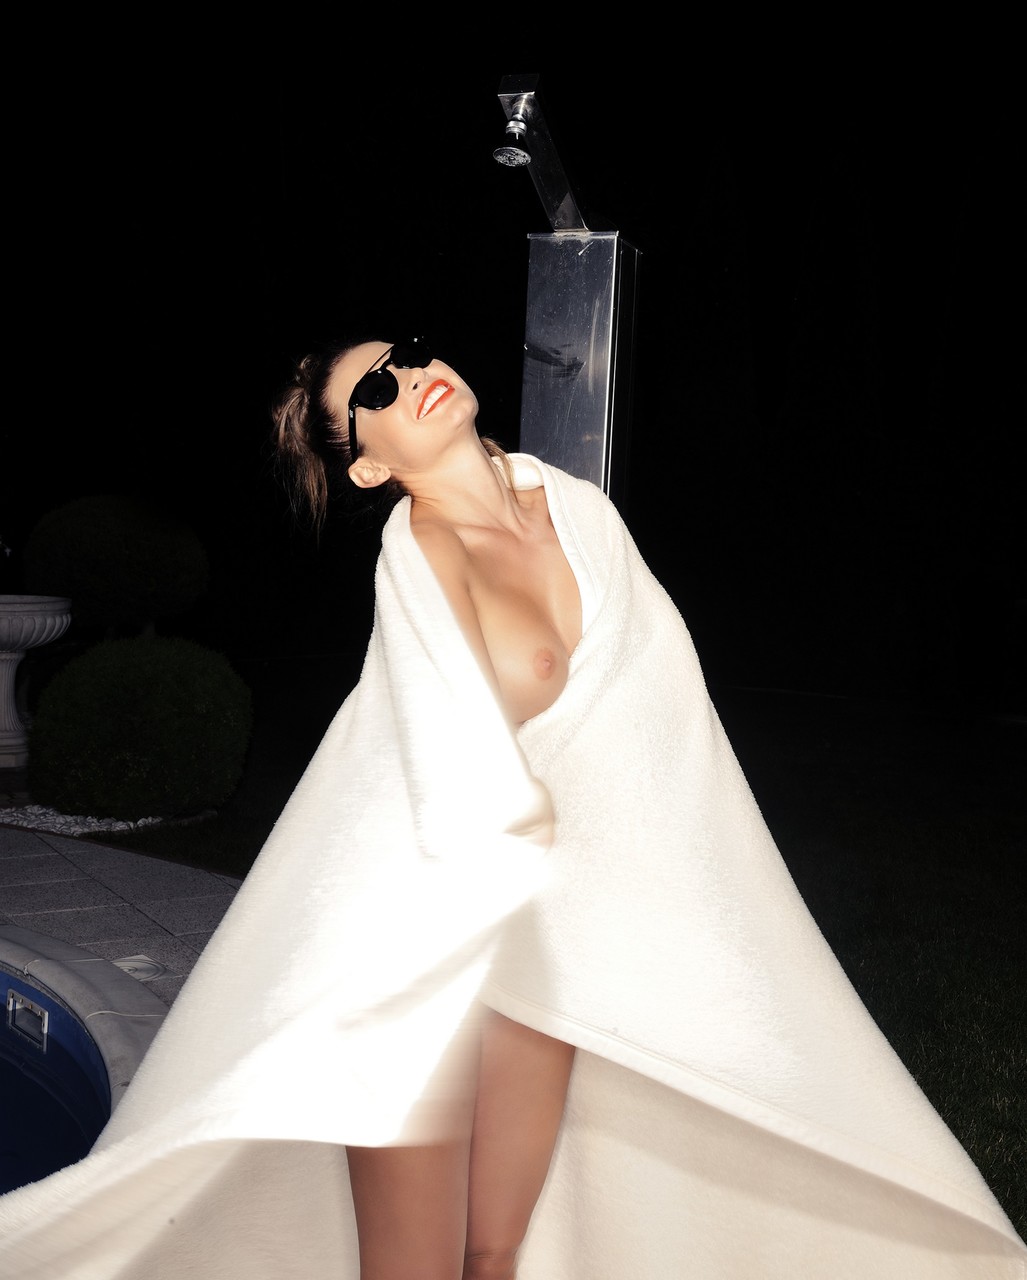 Hungarian stunning babe Mariana Pinter posing naked with sunglasses on ポルノ写真 #428438400